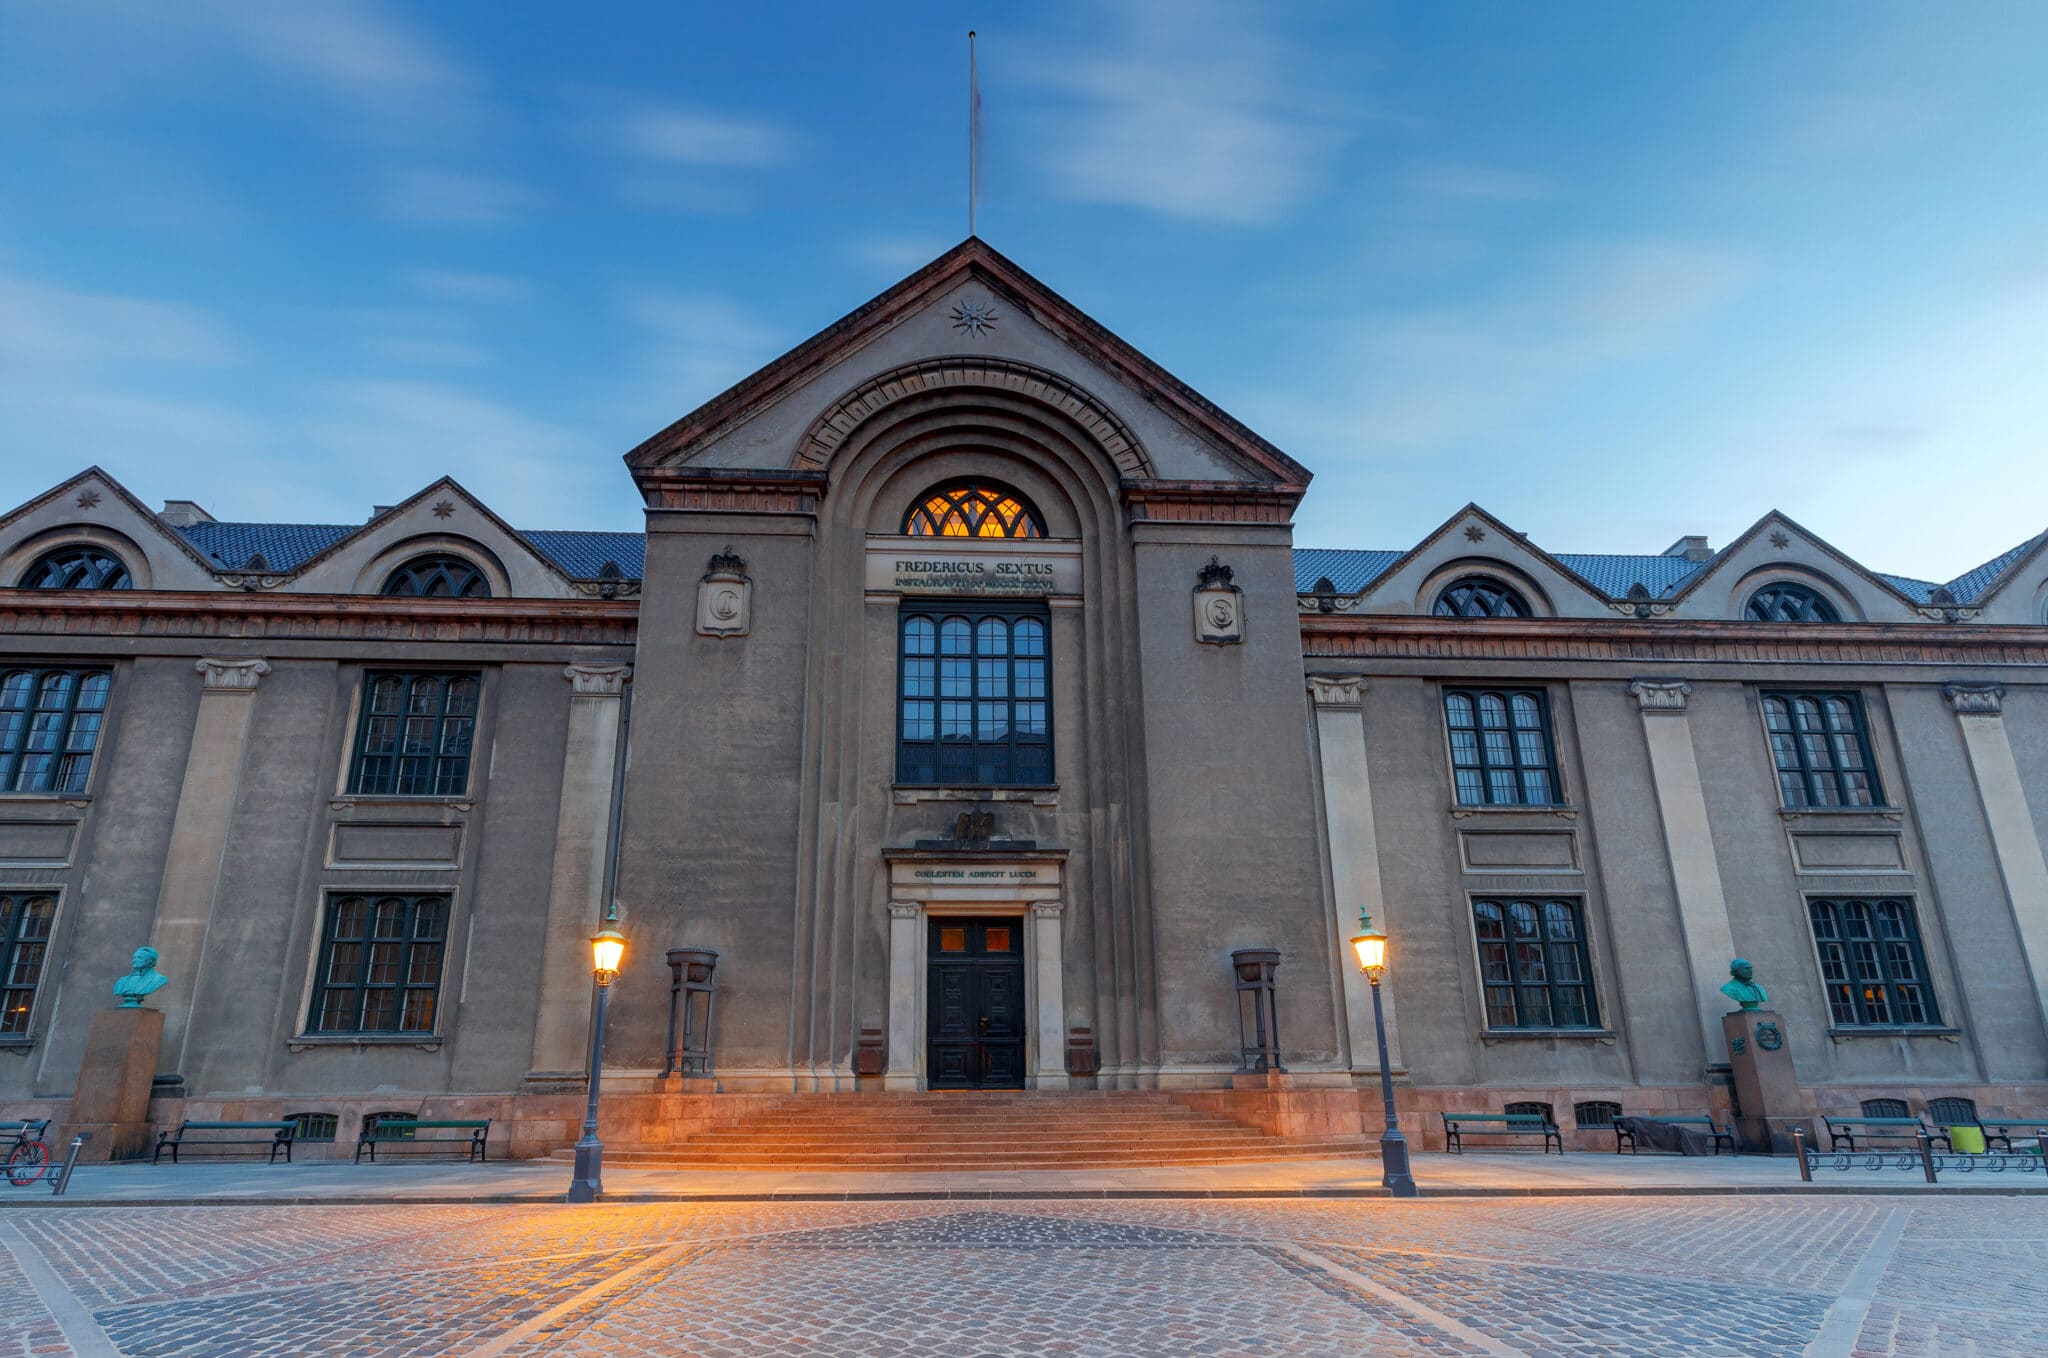 University of Copenhagen is the highest ranking Nordic university